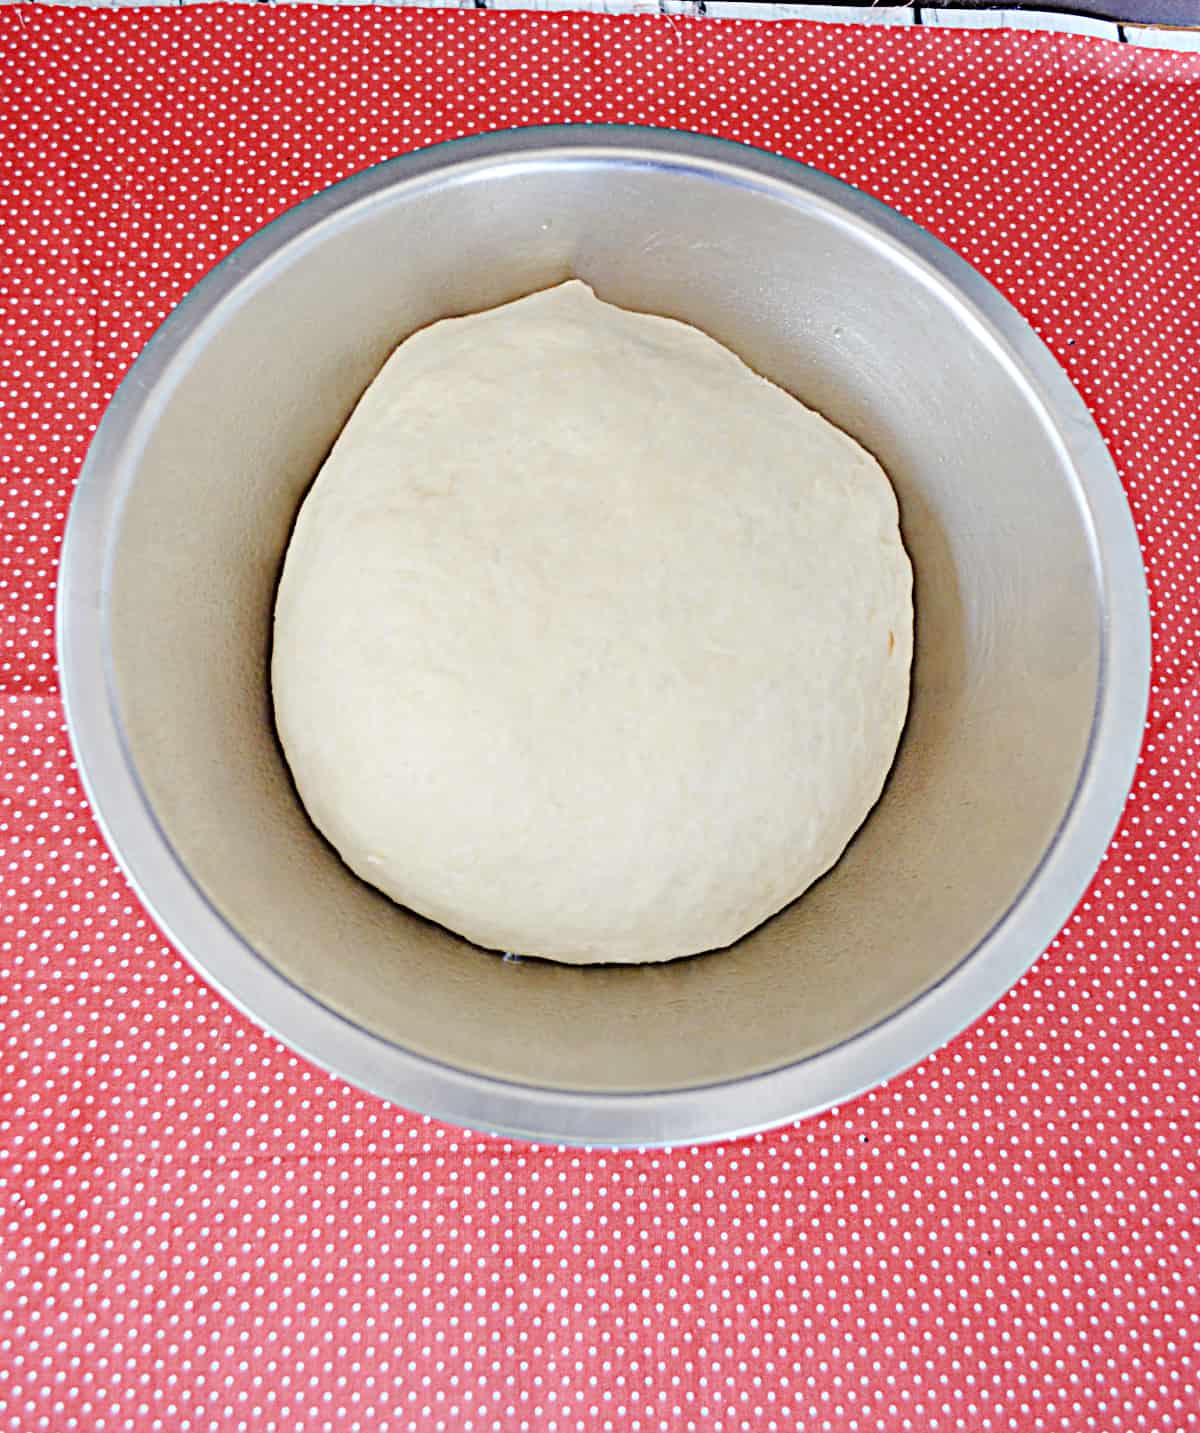 A bowl of rising dough